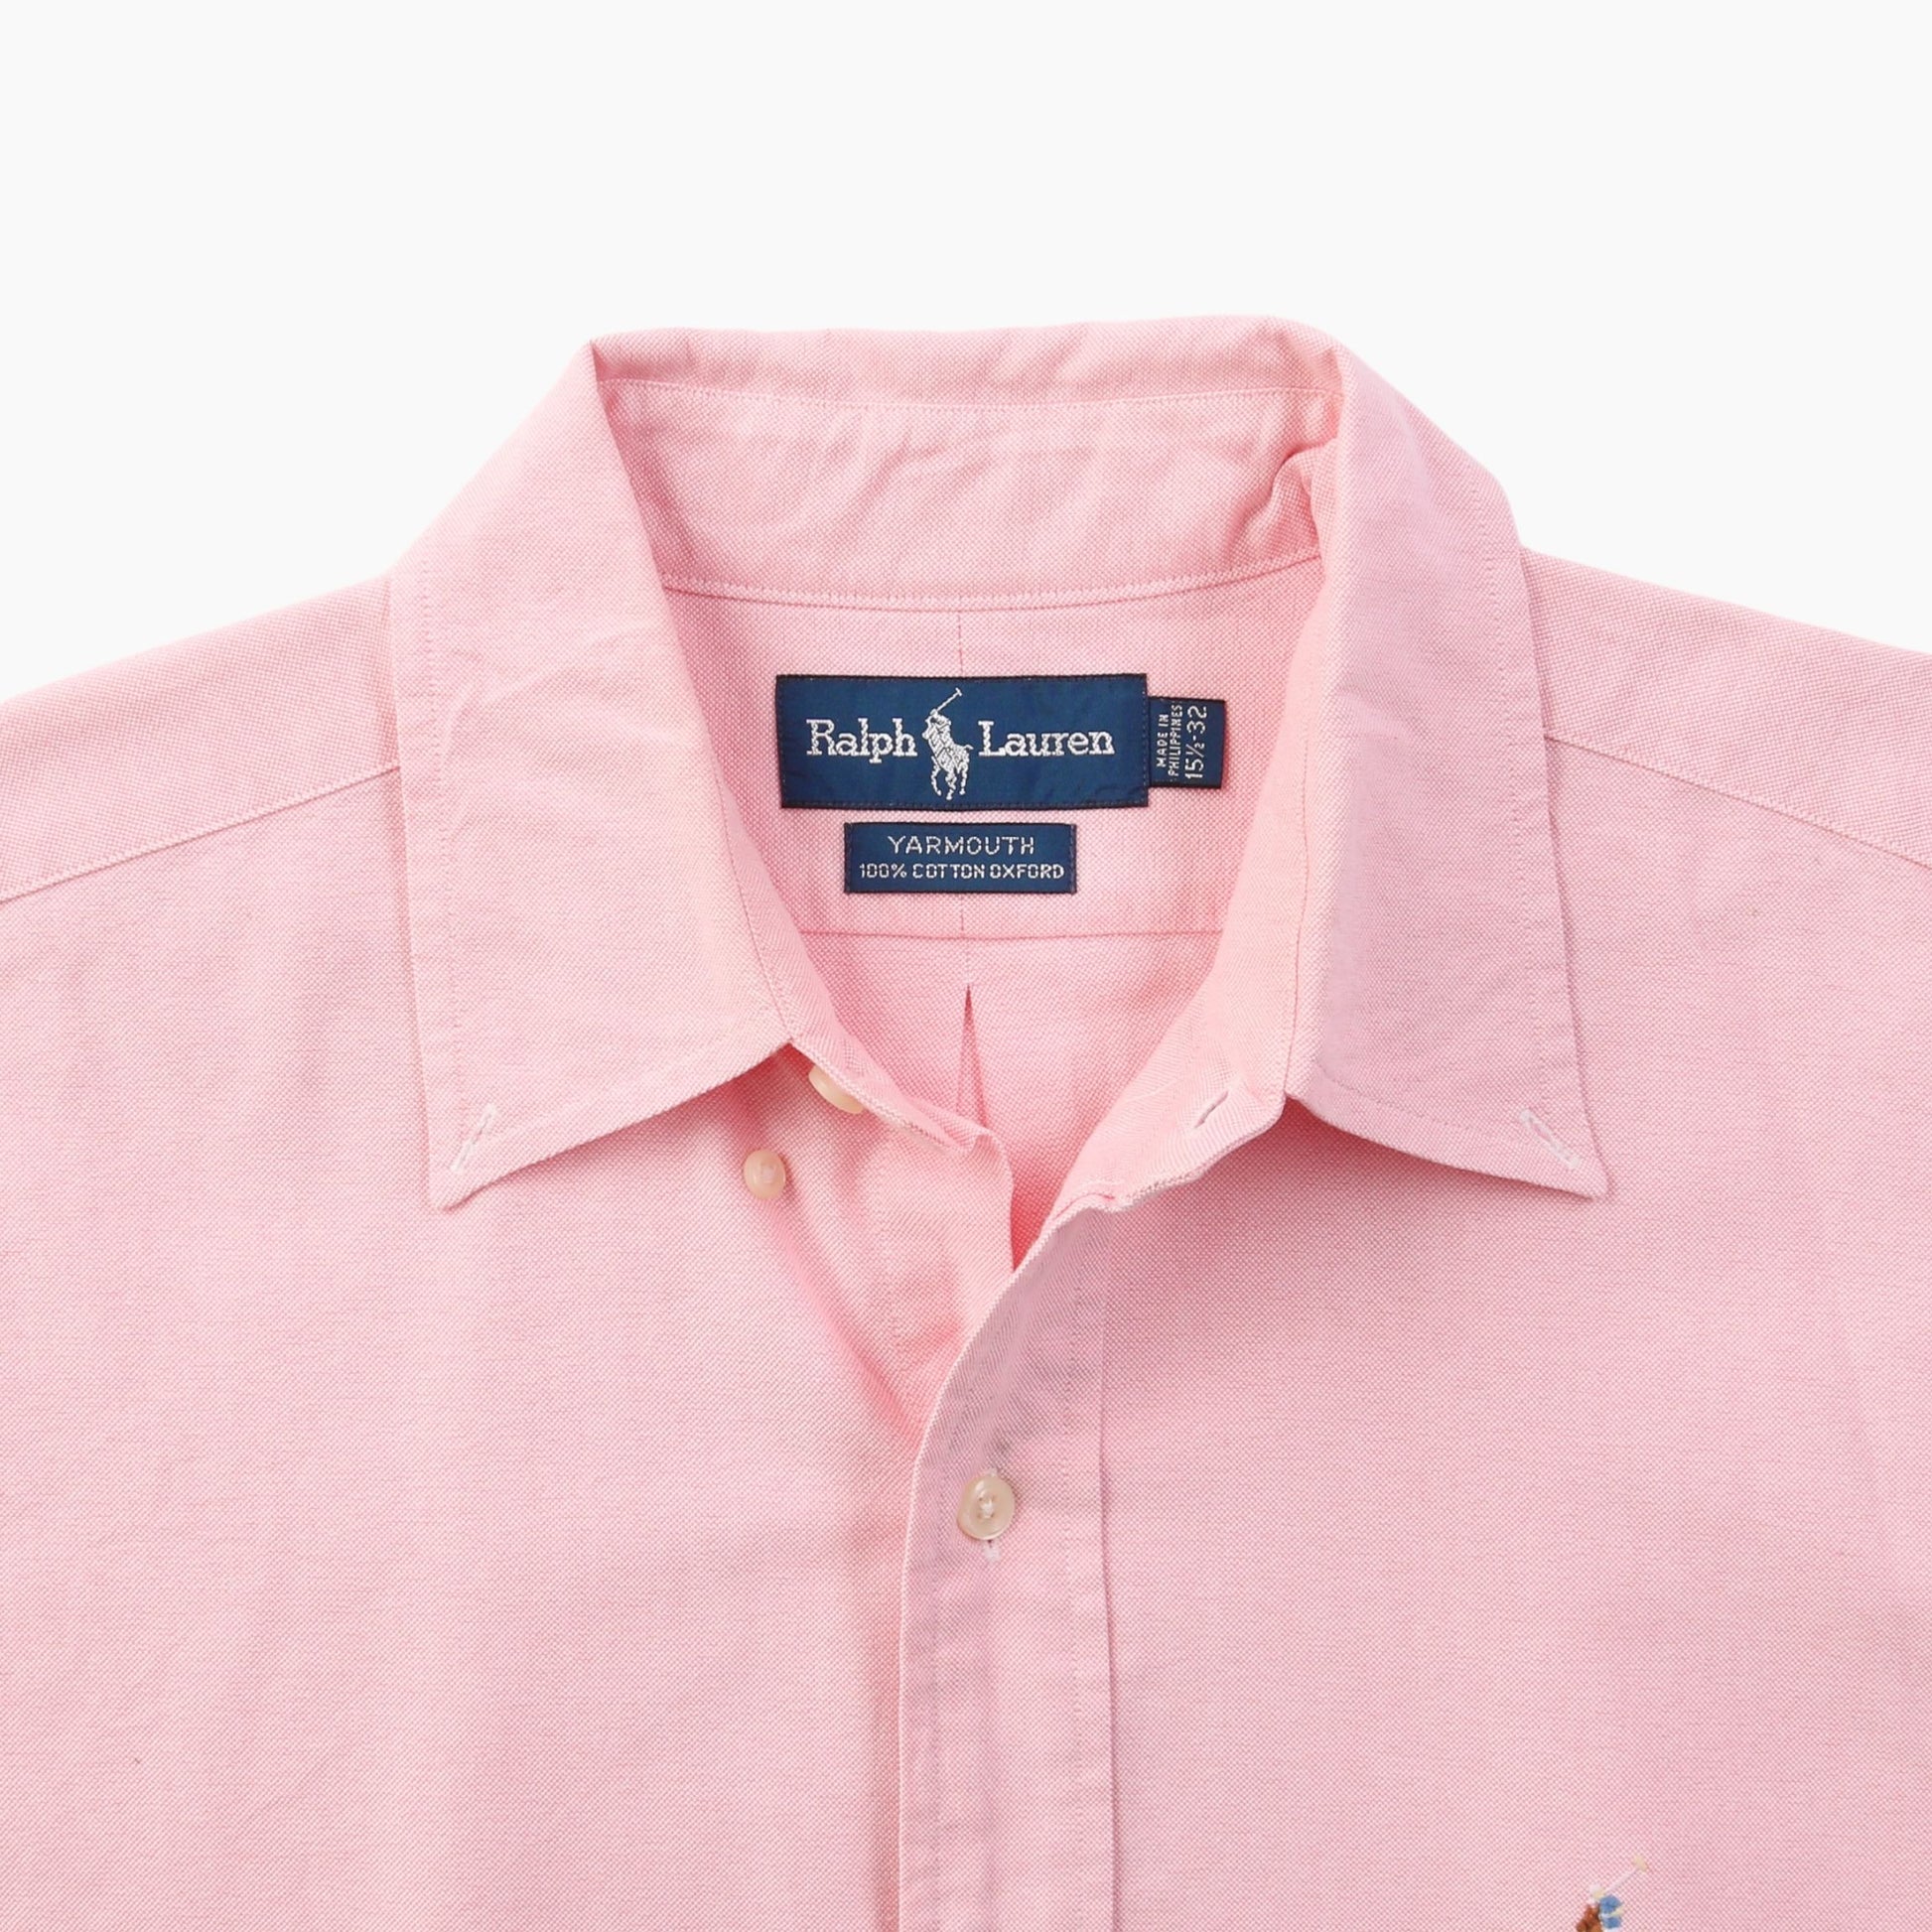 Vintage Shirt - Pink - American Madness